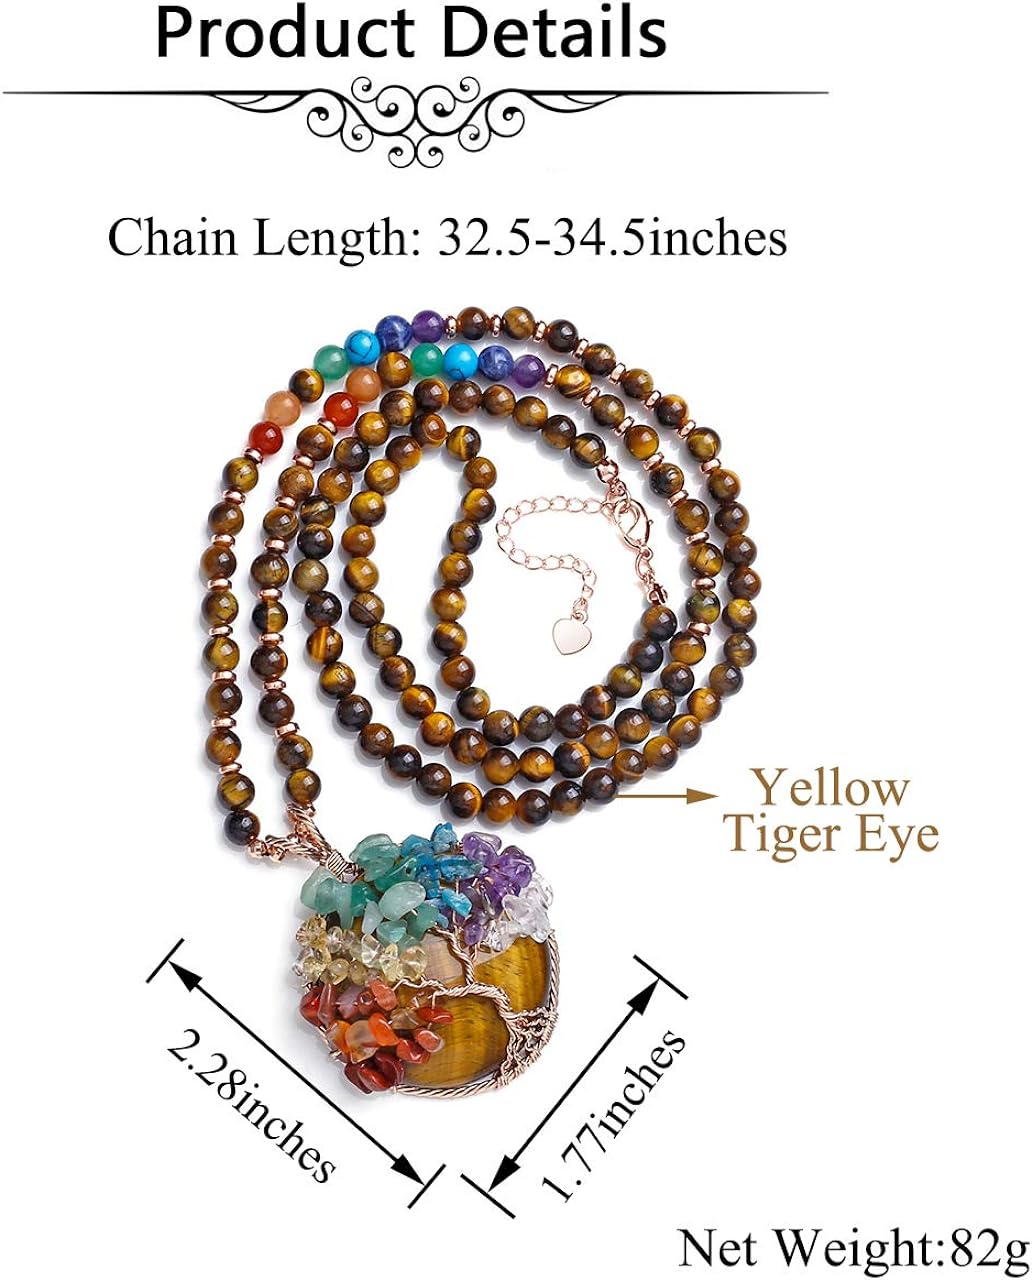 7 Chakra Reiki Repair Crystal Natural Gemstone Pendant Necklace Bracelet Silver Tree of Life Pendant Jewelry Set for Balance Meditation